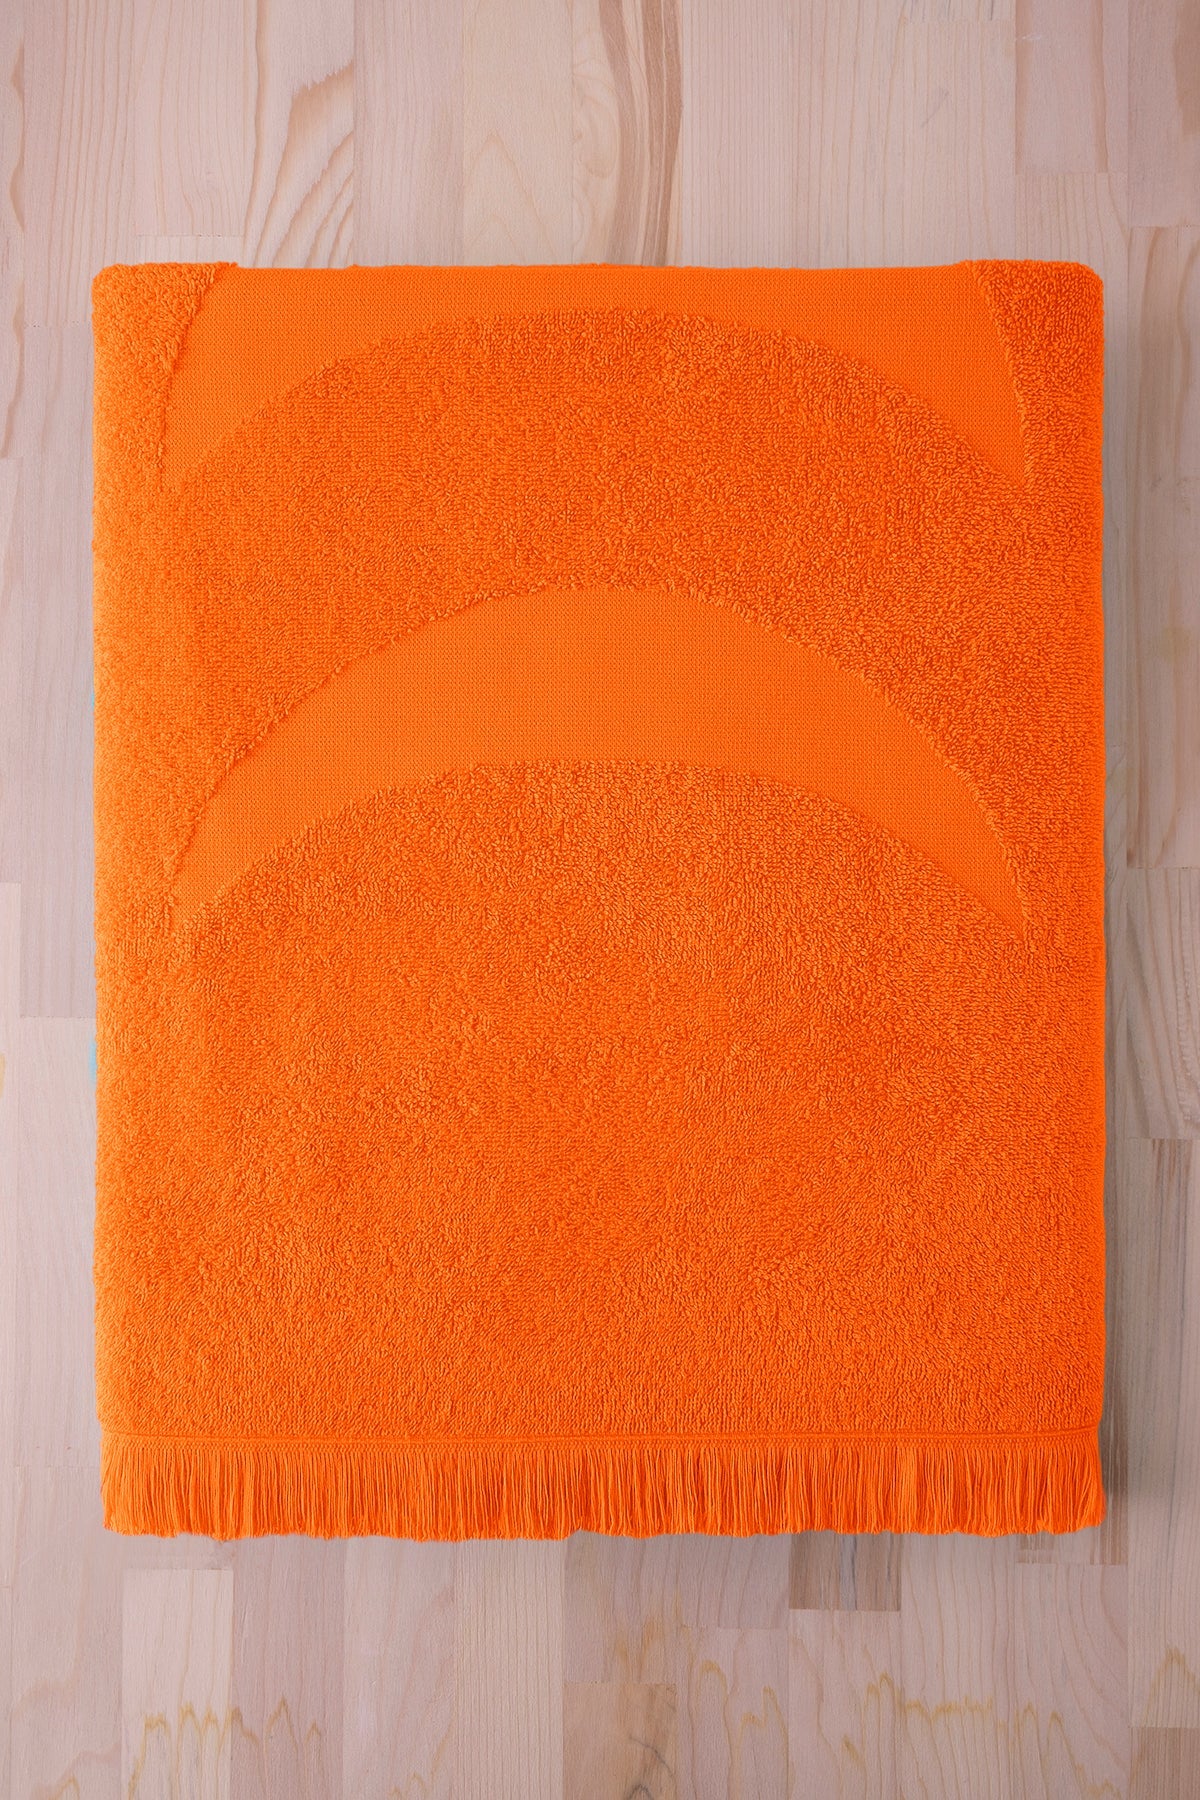 Lua Sunset - New Summer Trend 100x180cm. Premium Beach Towel